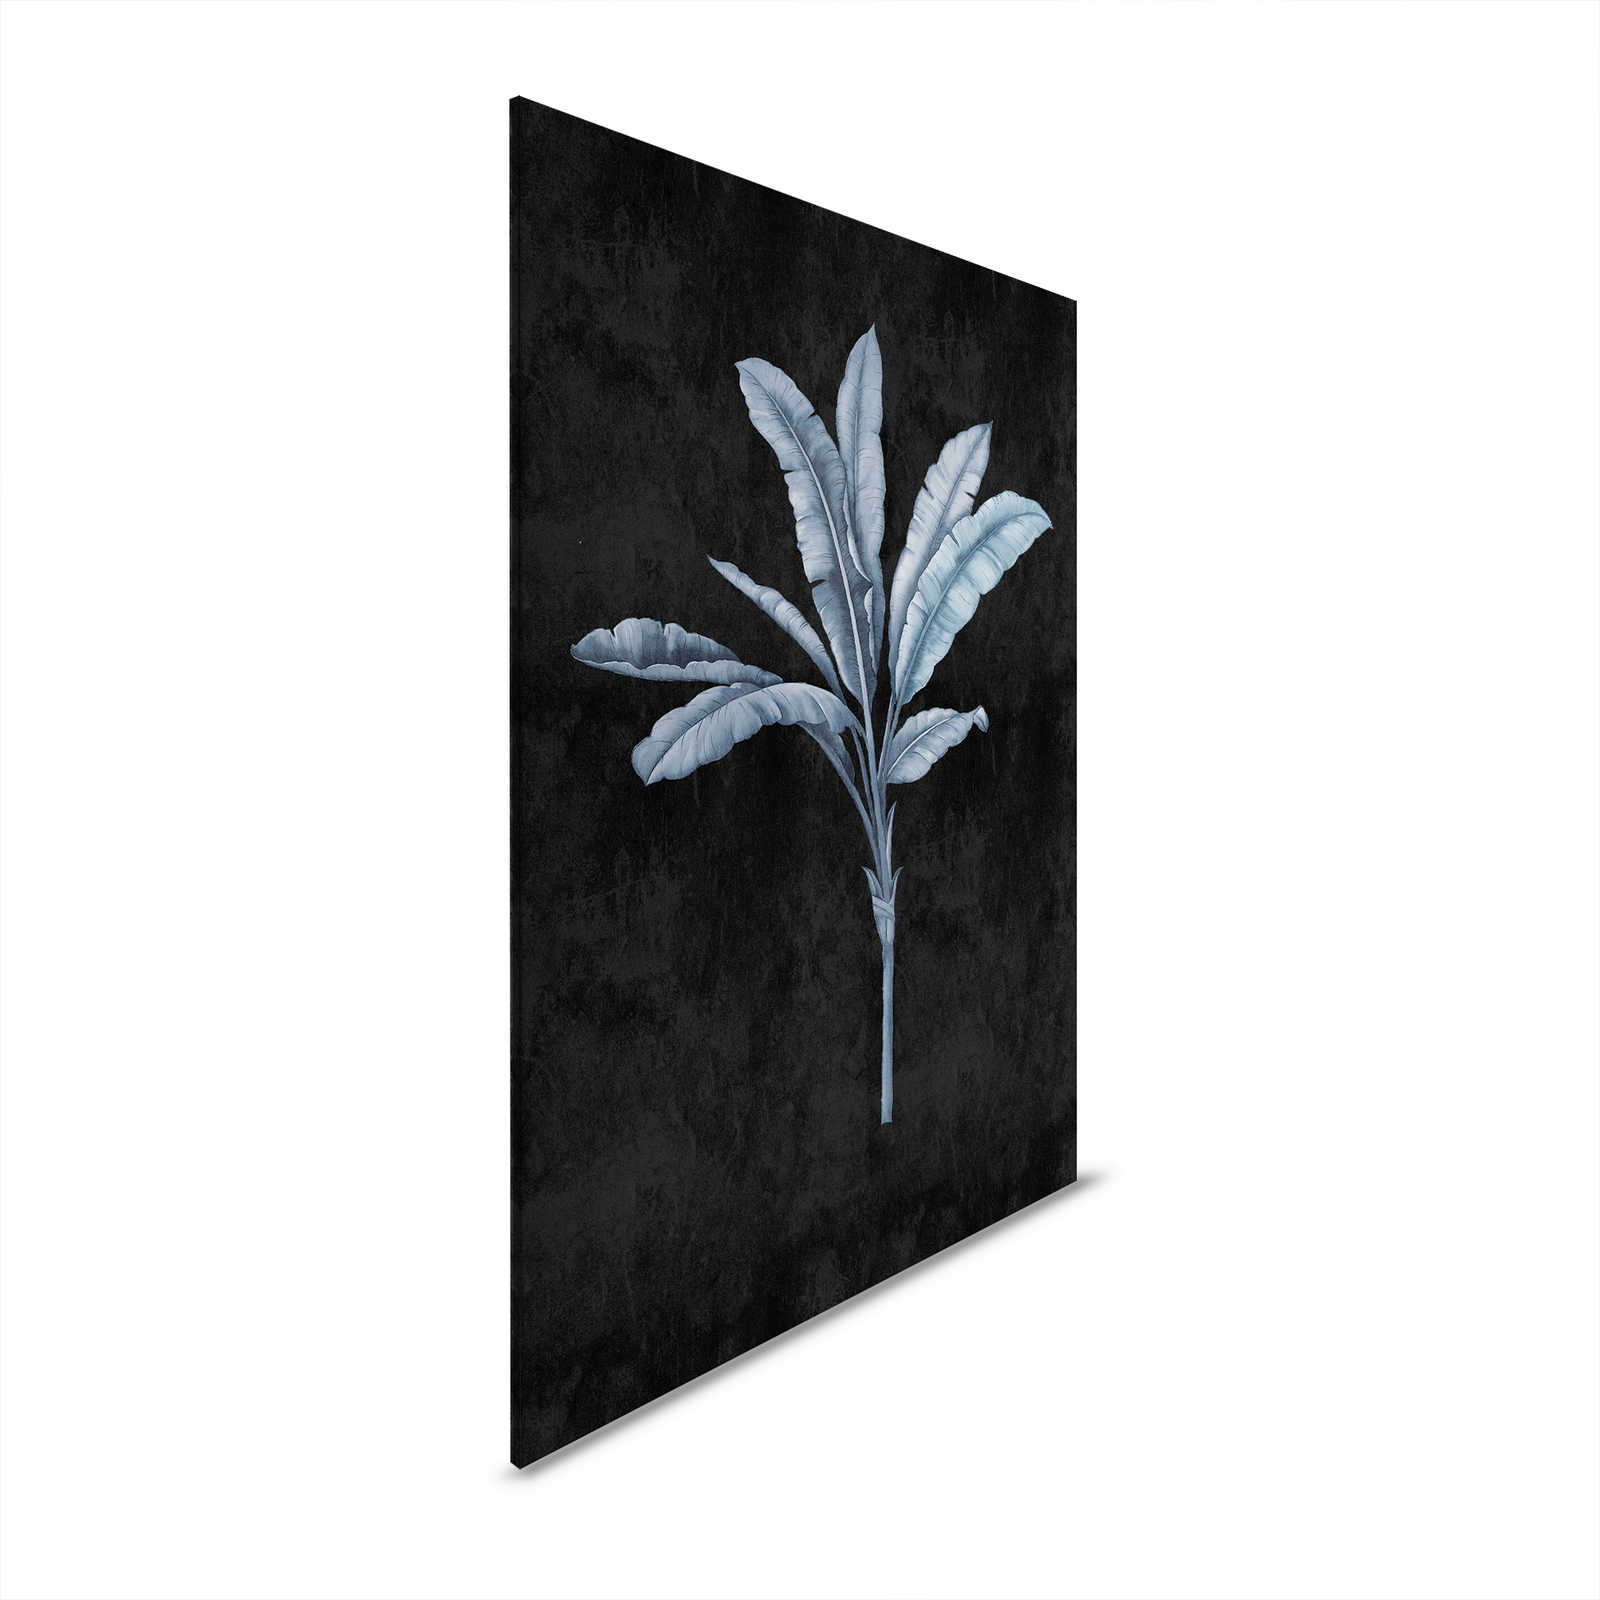 Fiji 2 - Leinwandbild Schwarz mit Blau Grauem Palmen-Motiv – 0,80 m x 1,20 m
